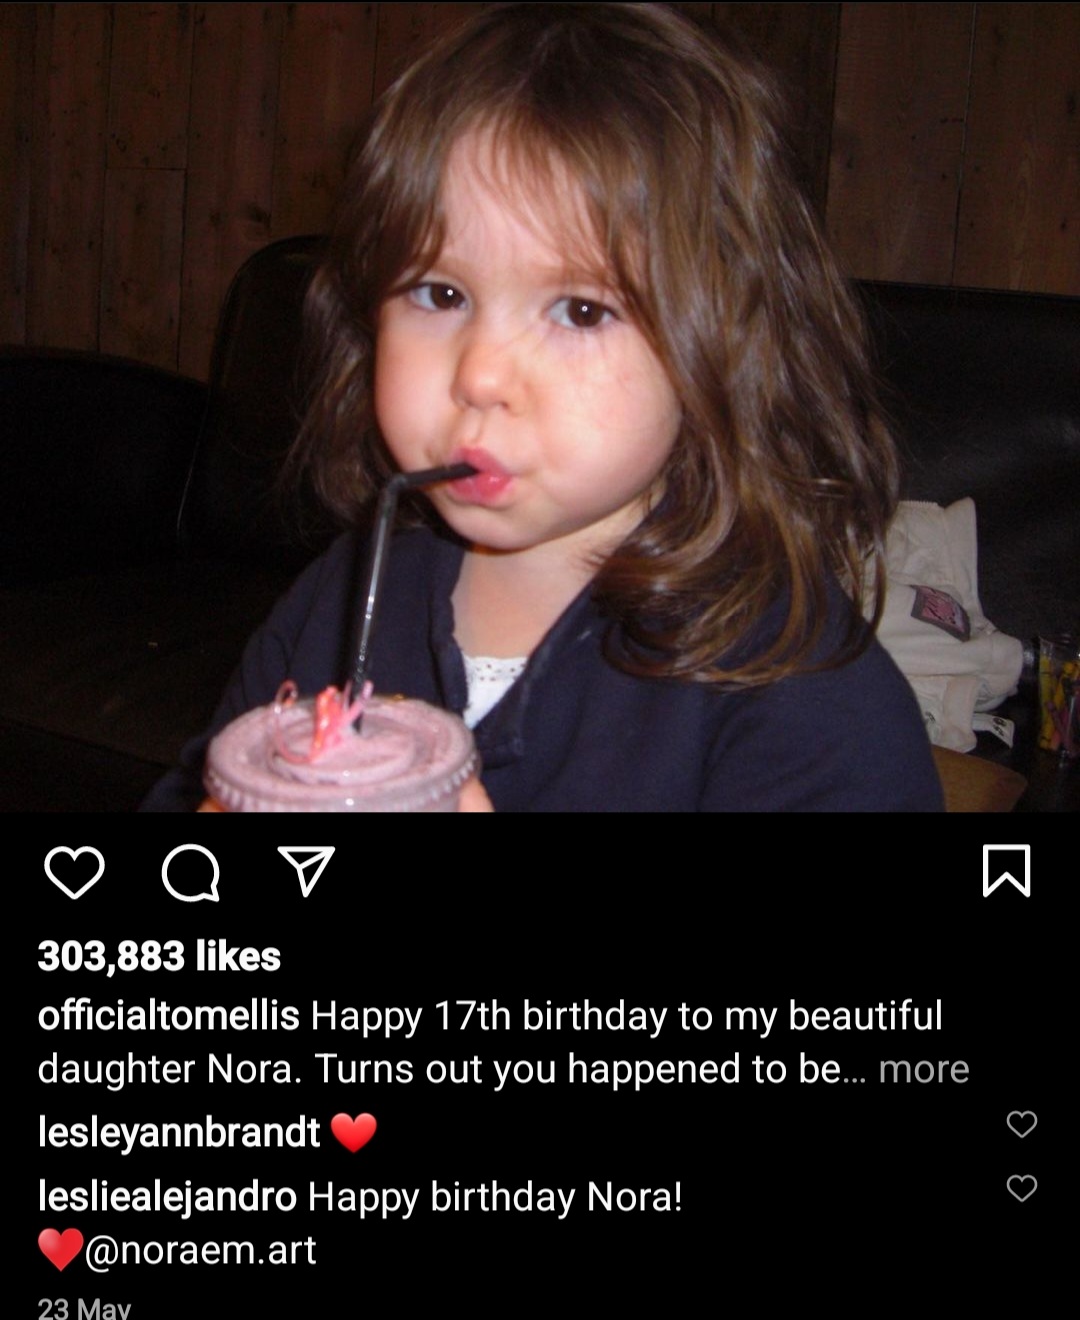 Lucifer Morningstar Daughter Nora Ellis Image (Source: Instagram)